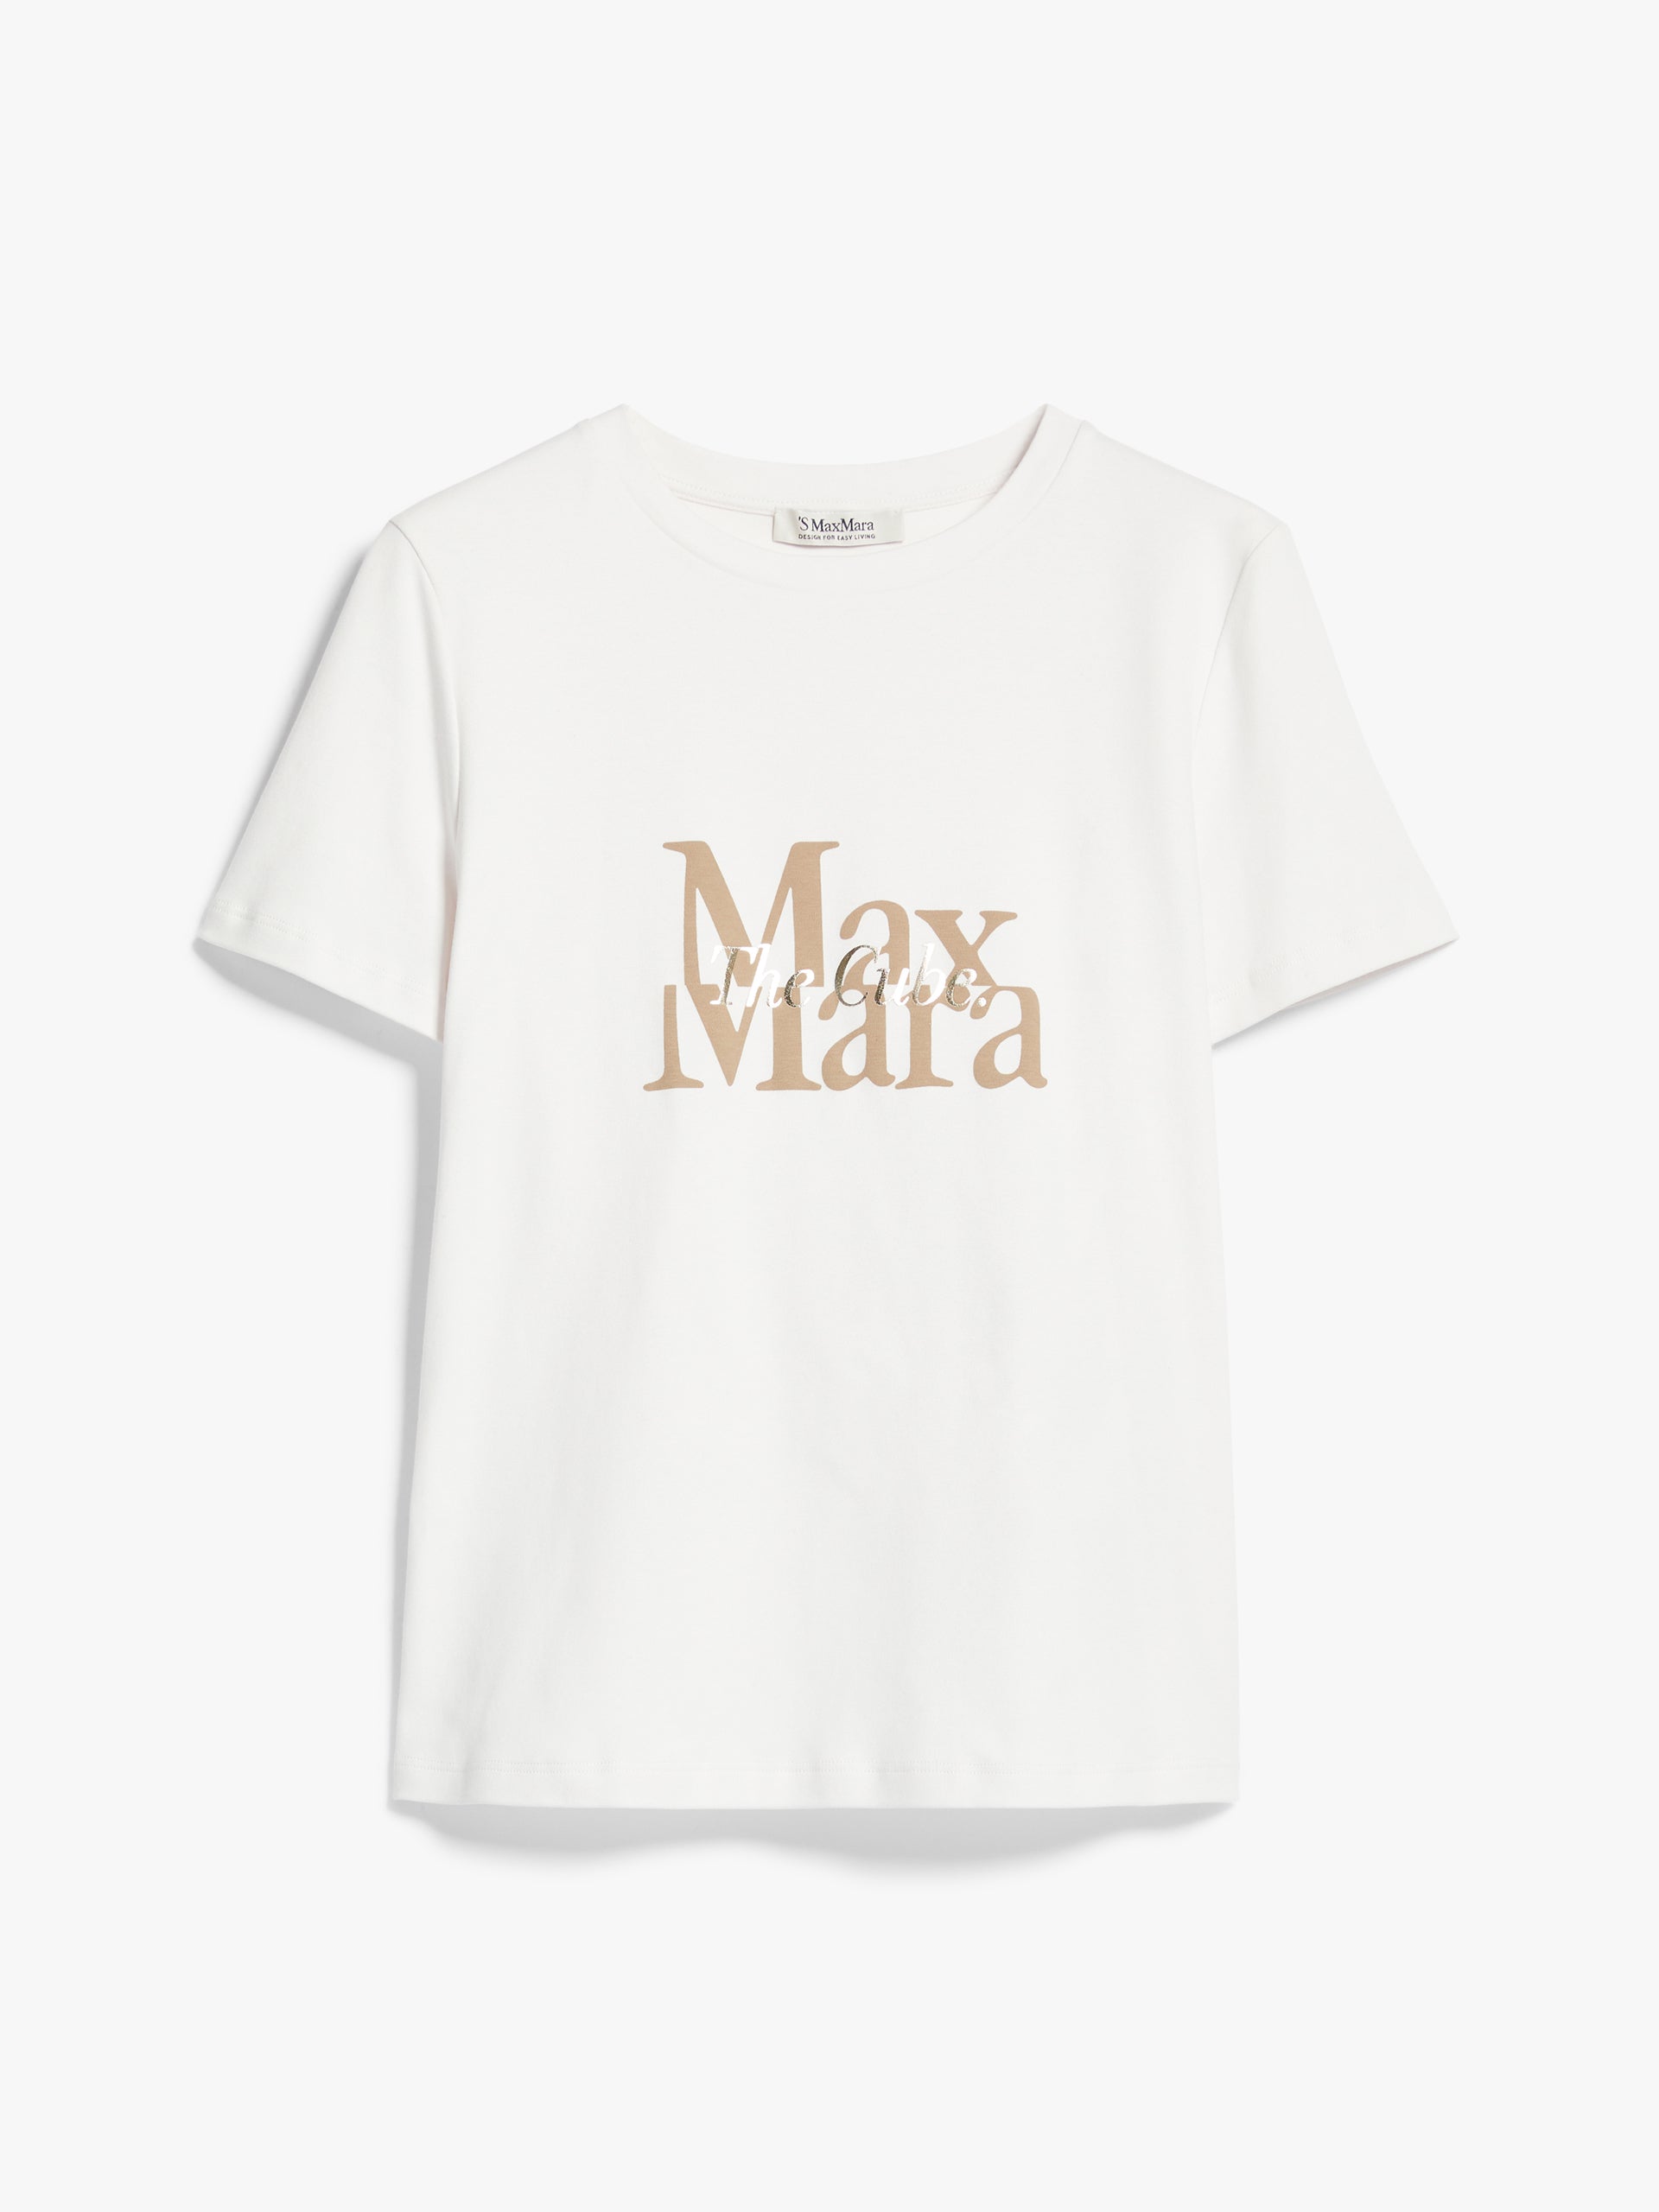 'S MAX MARA - T-SHIRT ONDA